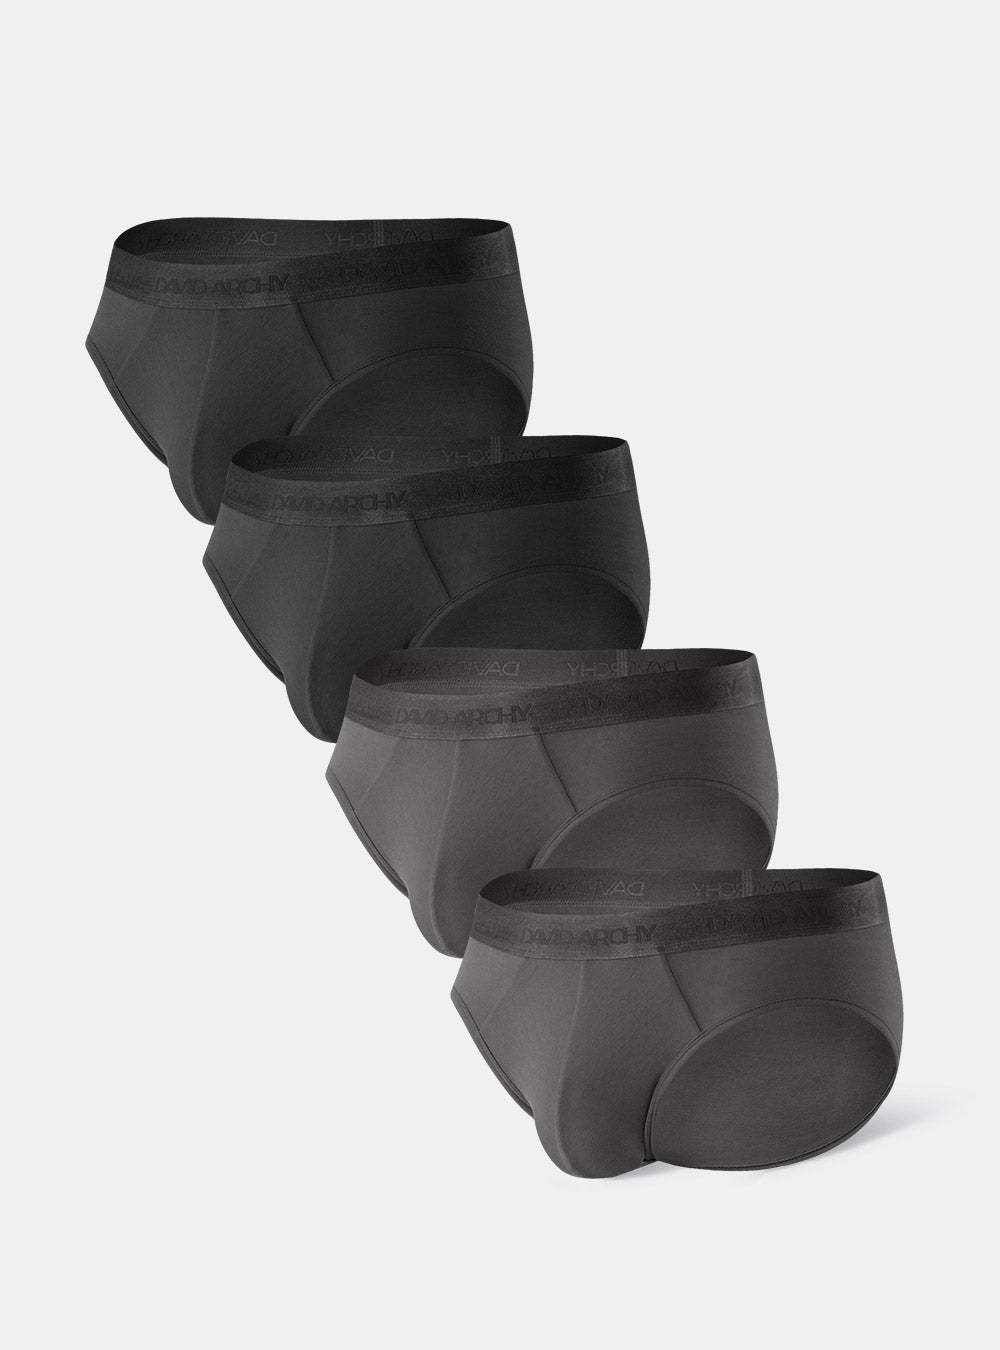 Buy DAVID ARCHY Men's Dual Pouch Underwear Micro Modal Trunks